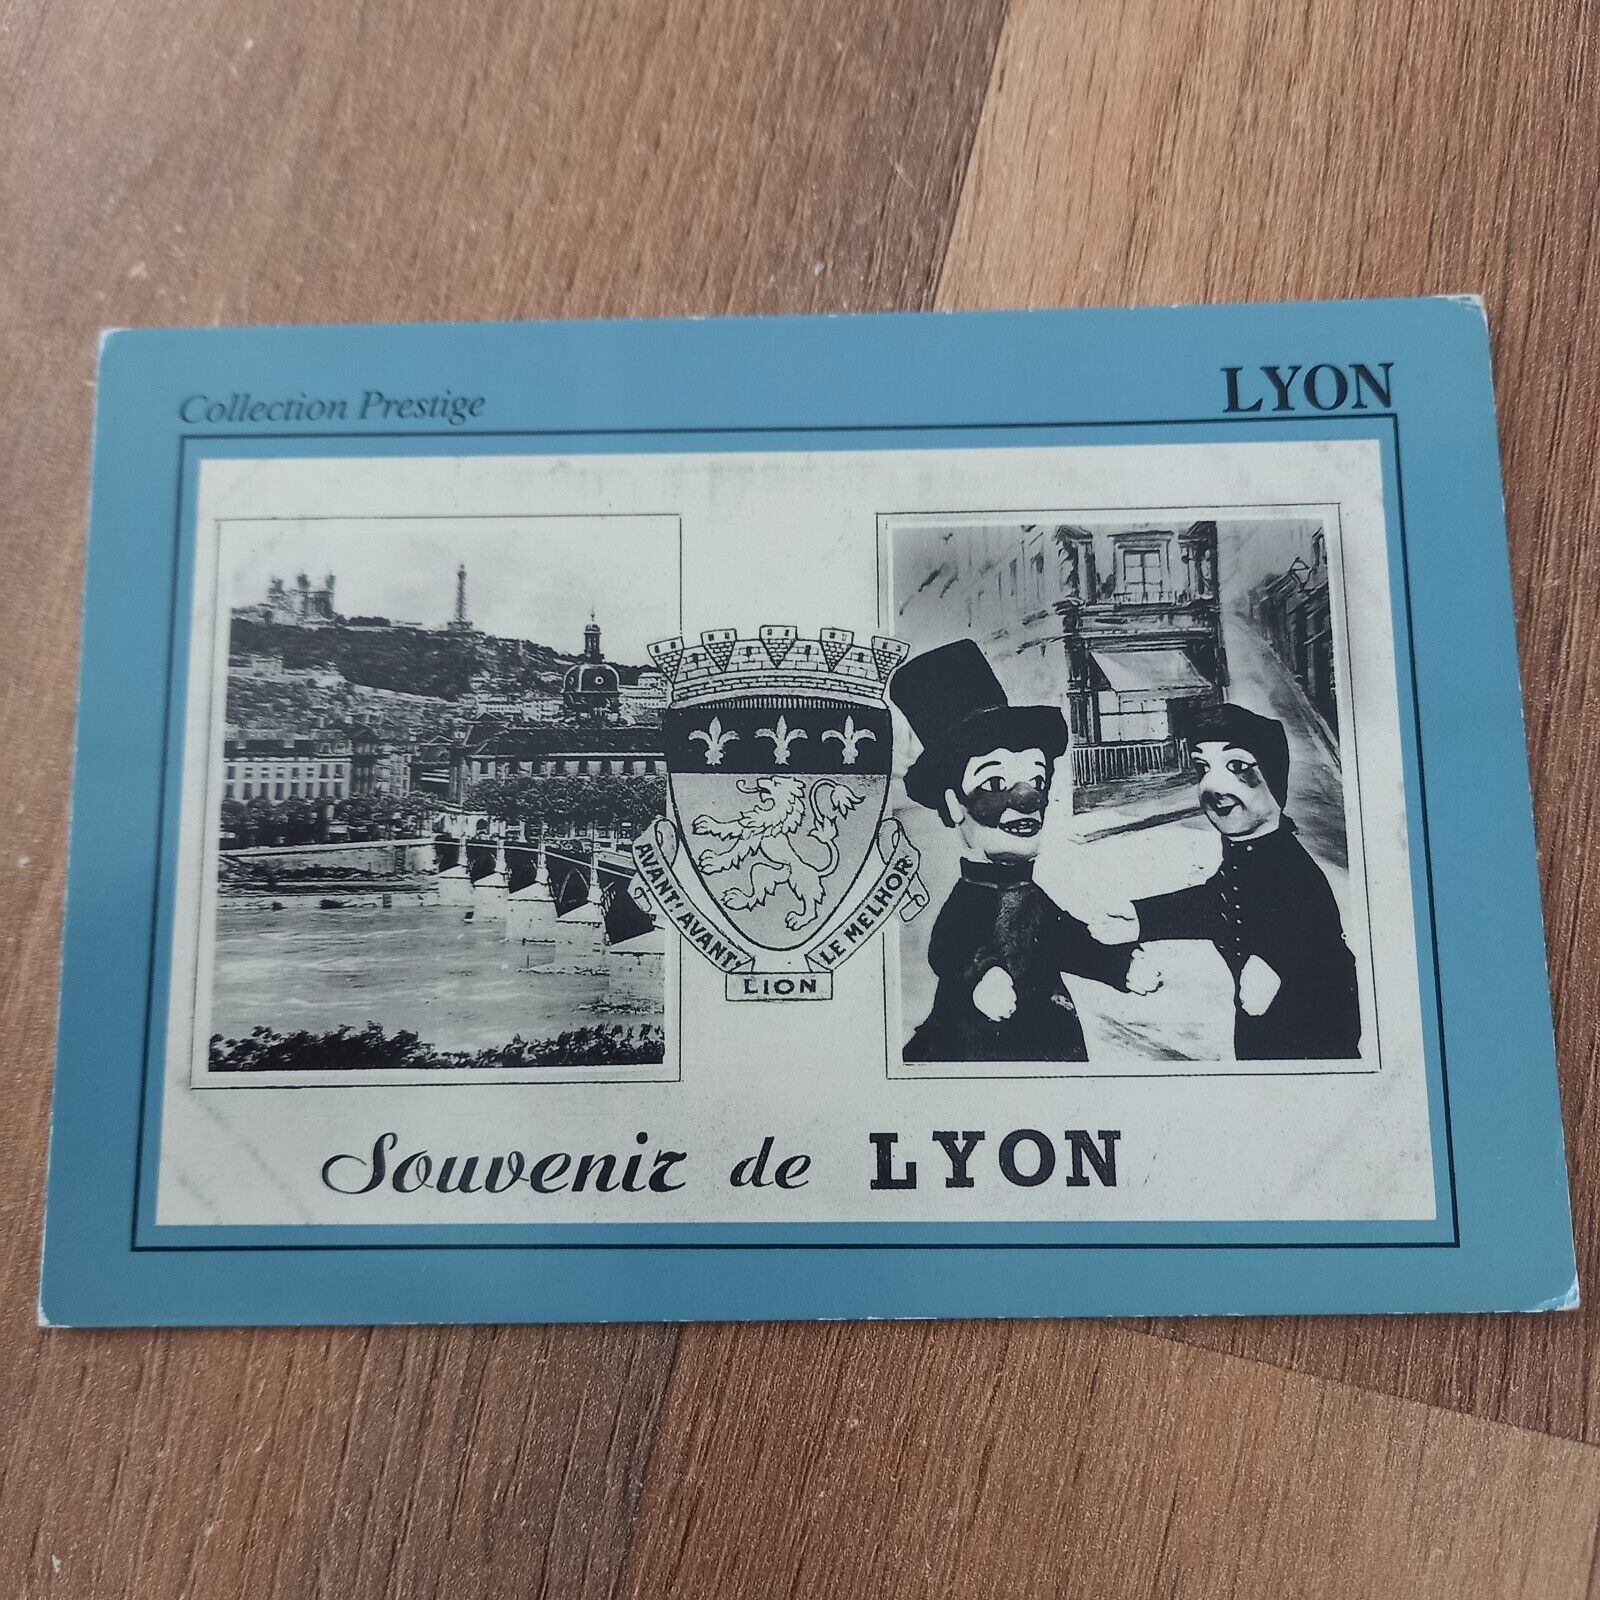 Lyon Souvenir Postcard with Guignol